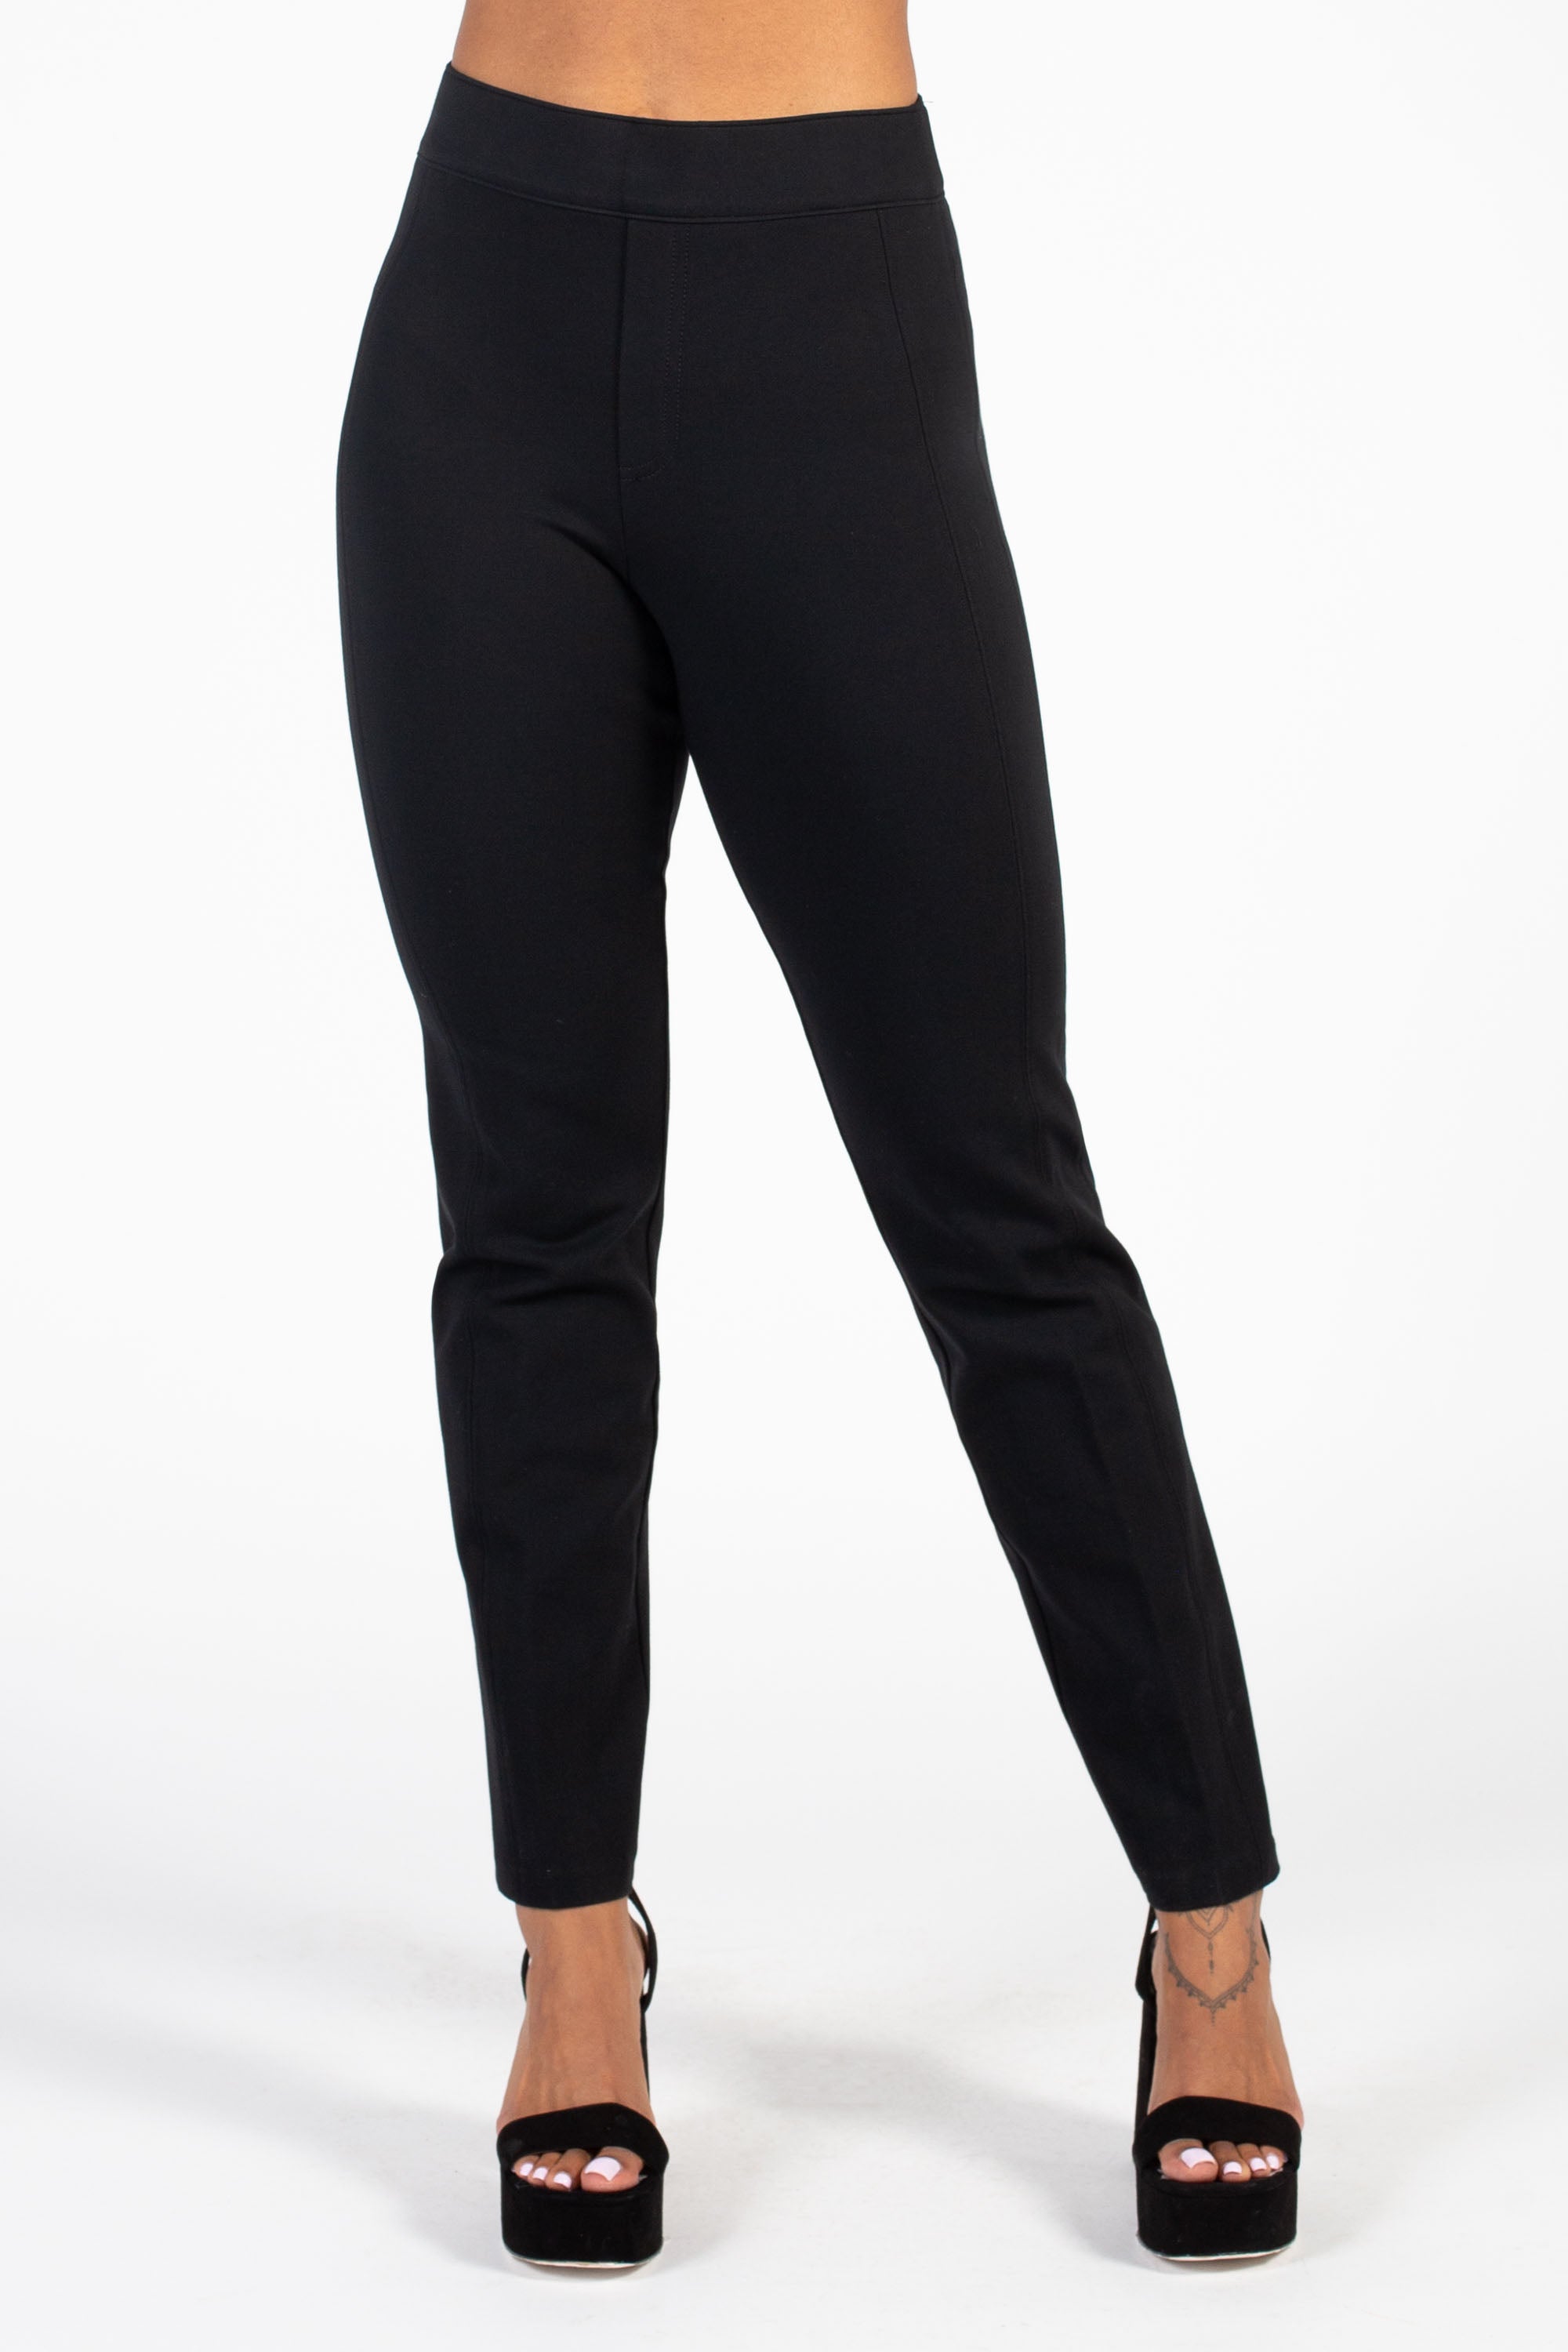 Ardene Destination Sweatpants in Black, Size, Polyester/Cotton, Fleece- Lined